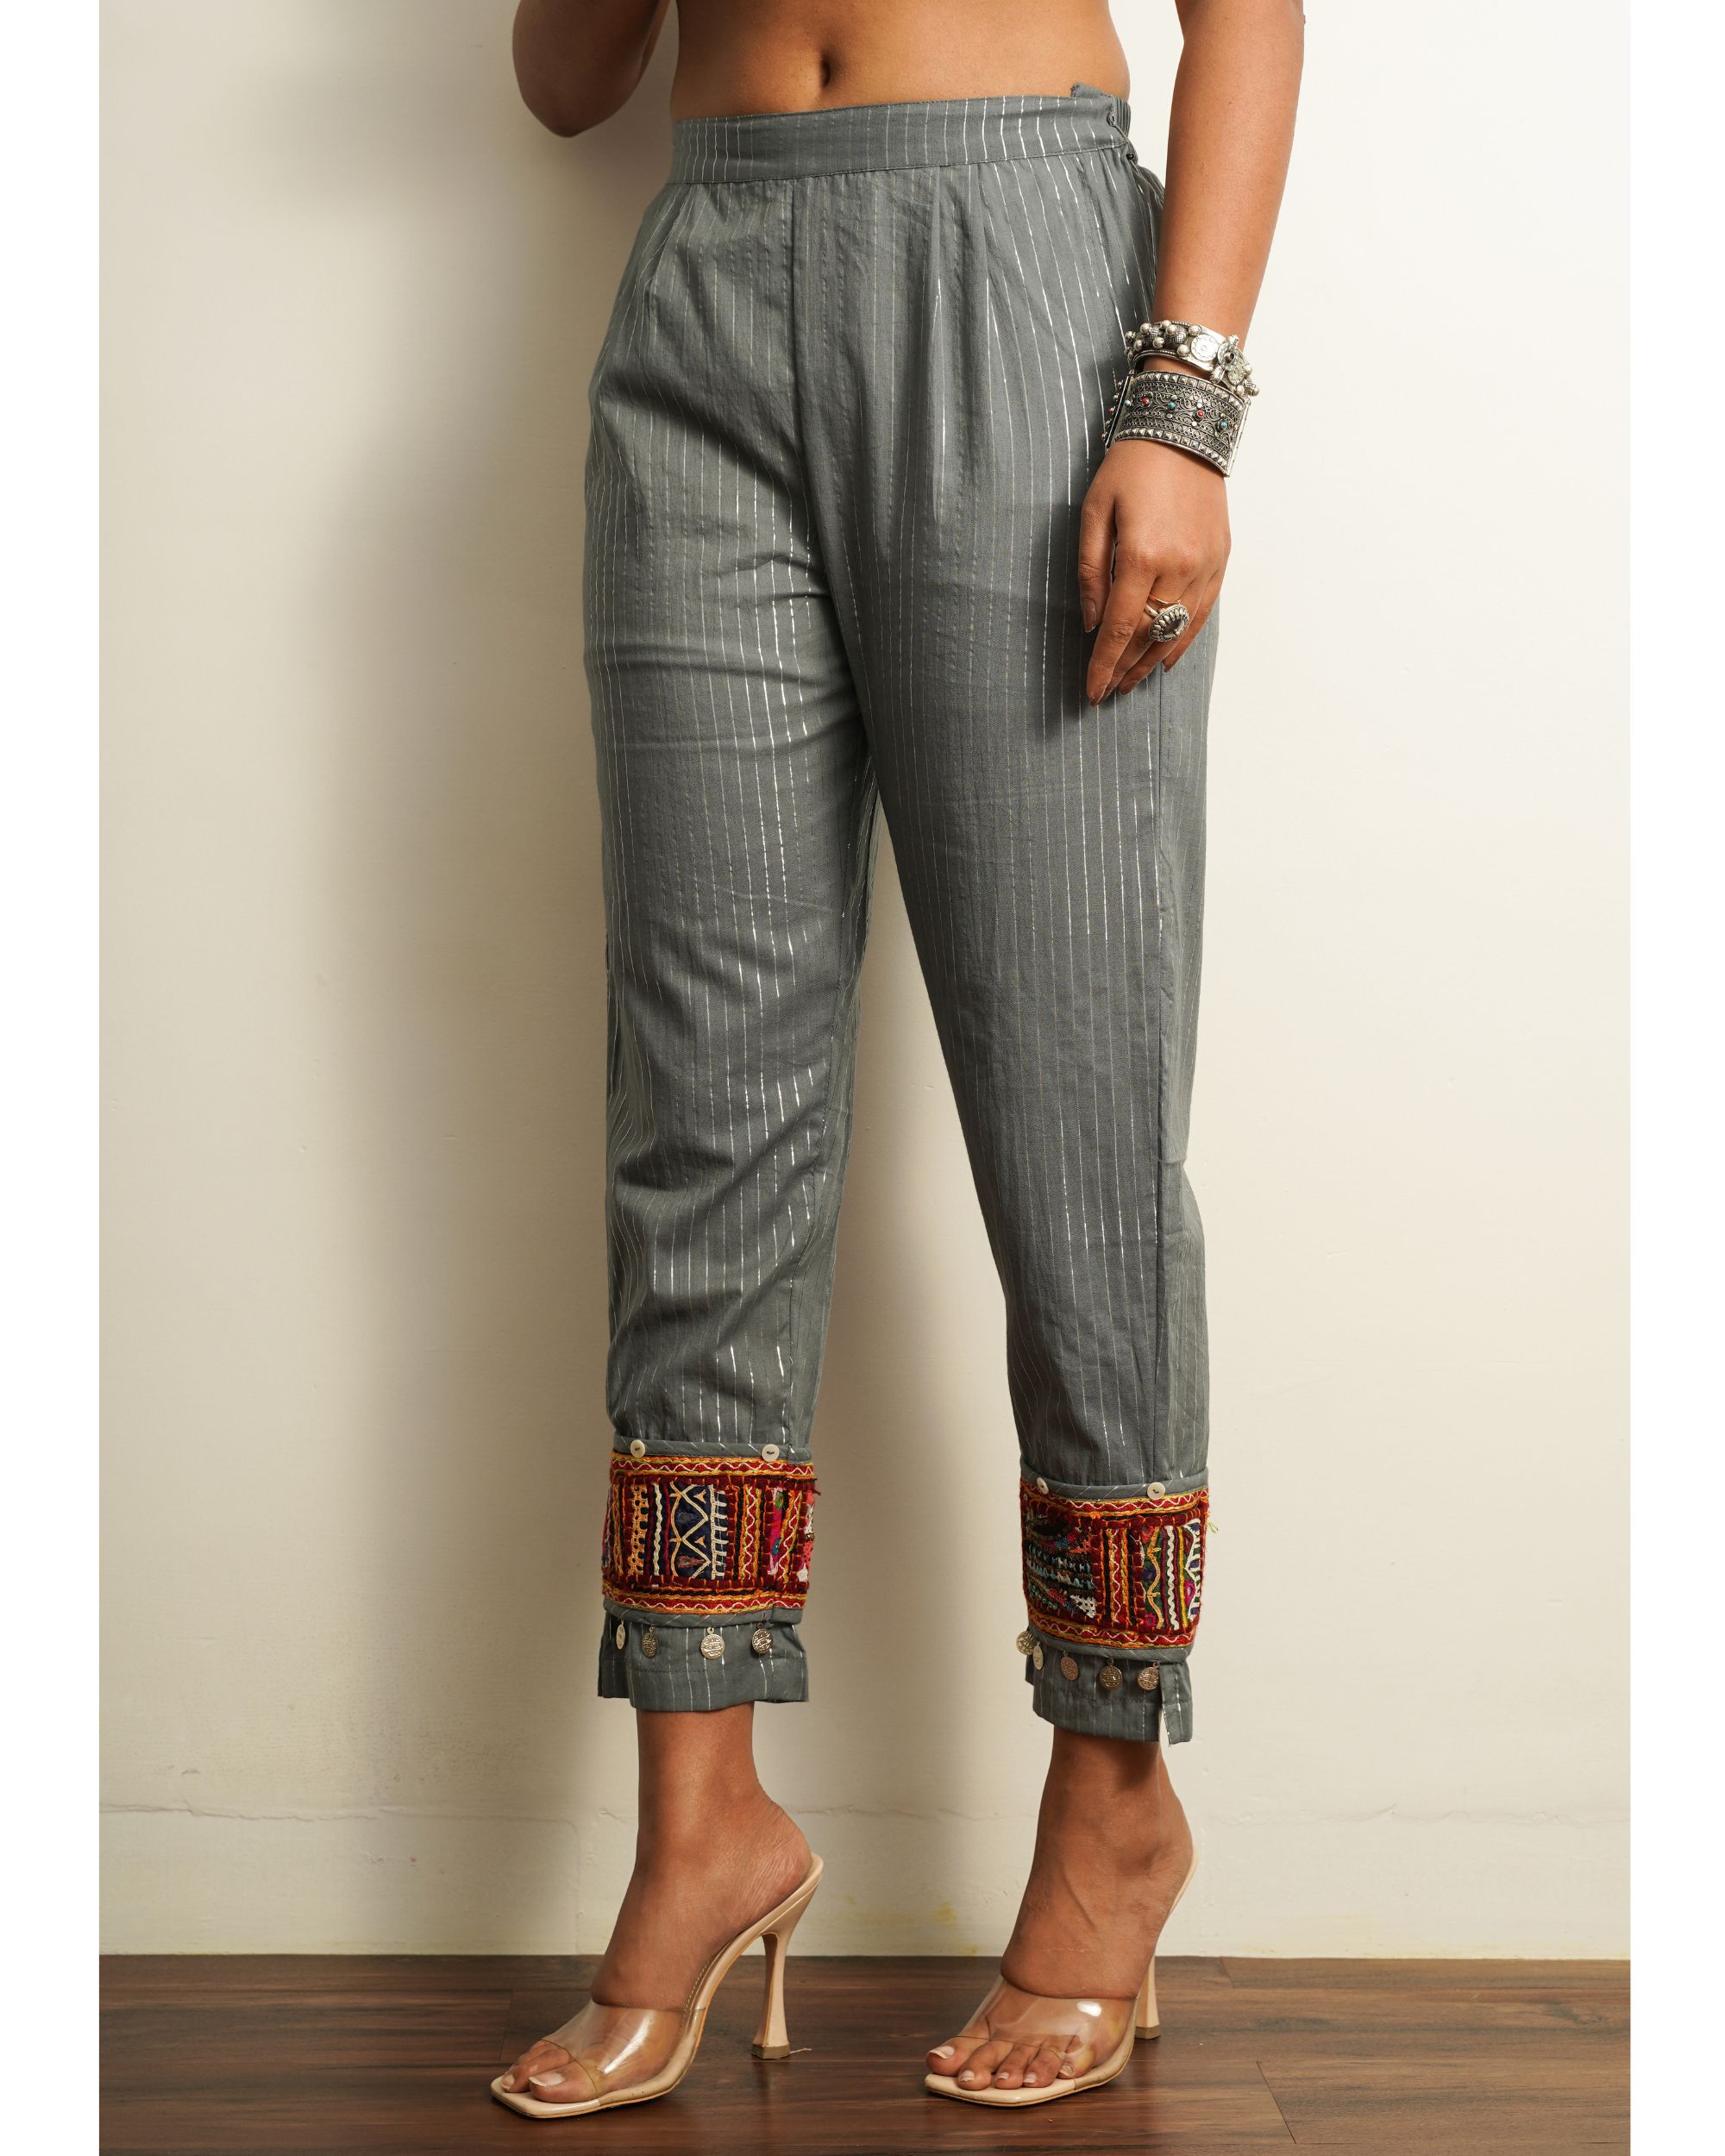 Grey strips ankle length cotton pant by Keva